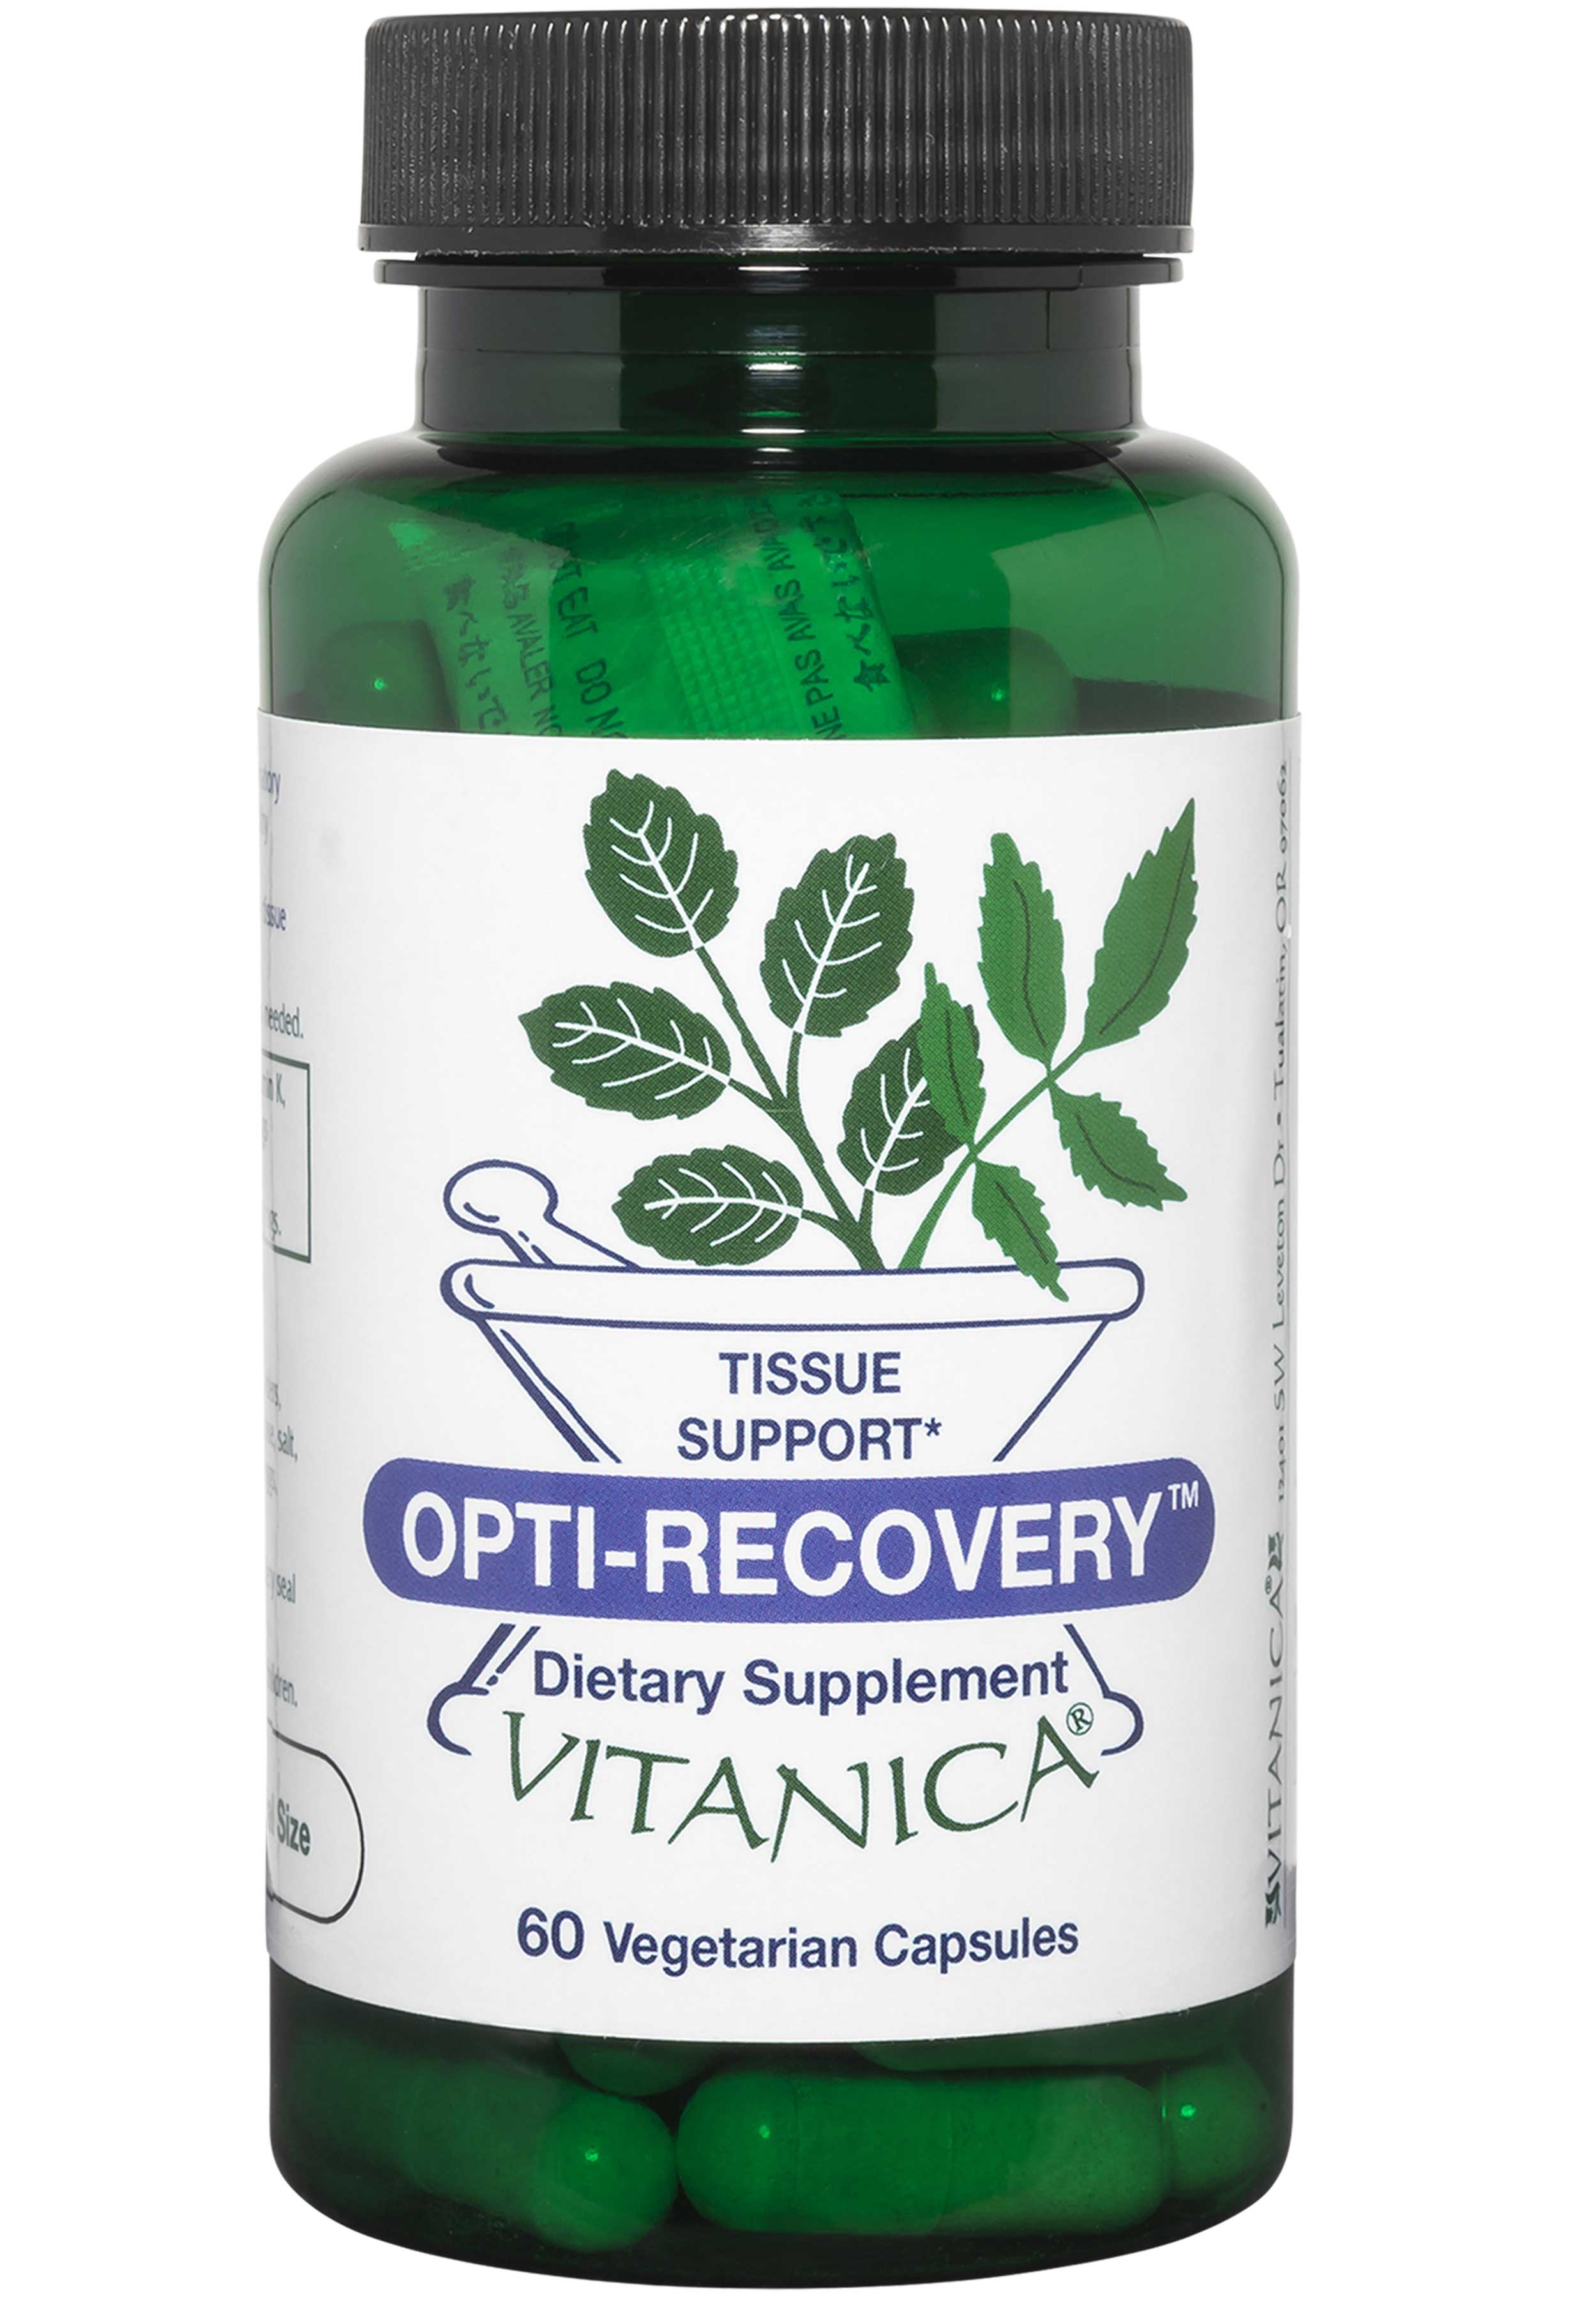 Vitanica Opti-Recovery